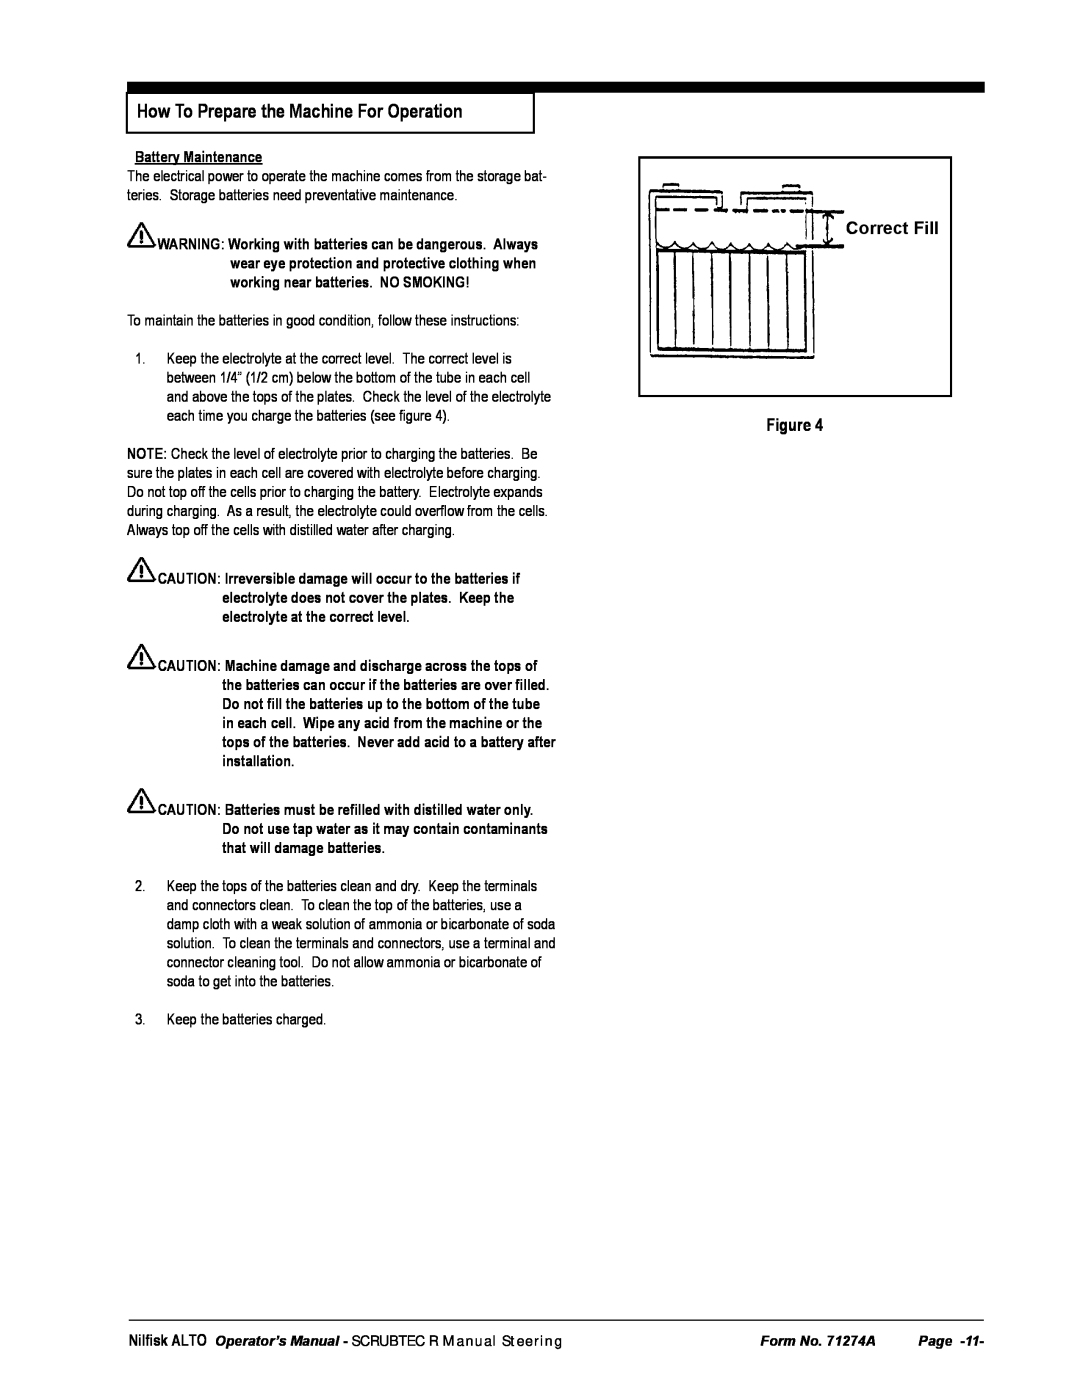 Nilfisk-ALTO 571, 586 manual How To Prepare the Machine For Operation, Correct Fill 